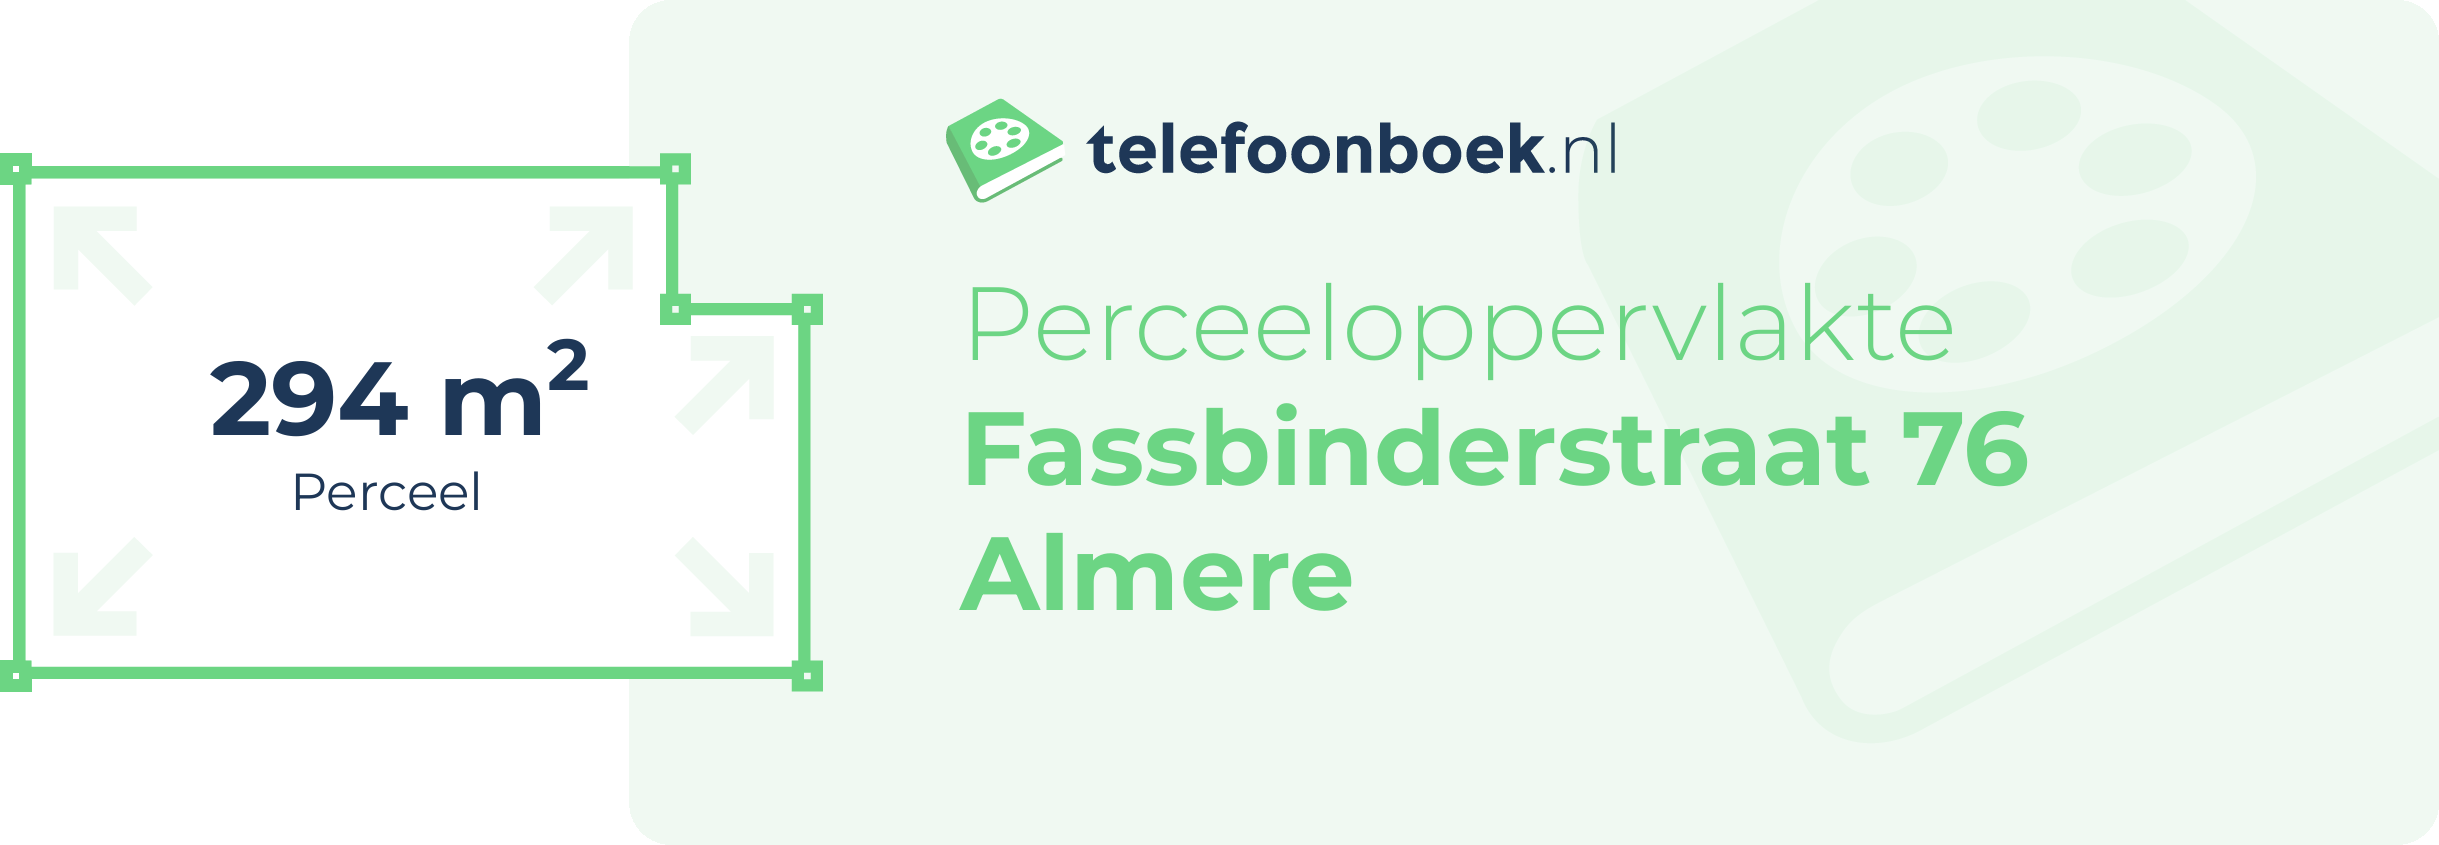 Perceeloppervlakte Fassbinderstraat 76 Almere